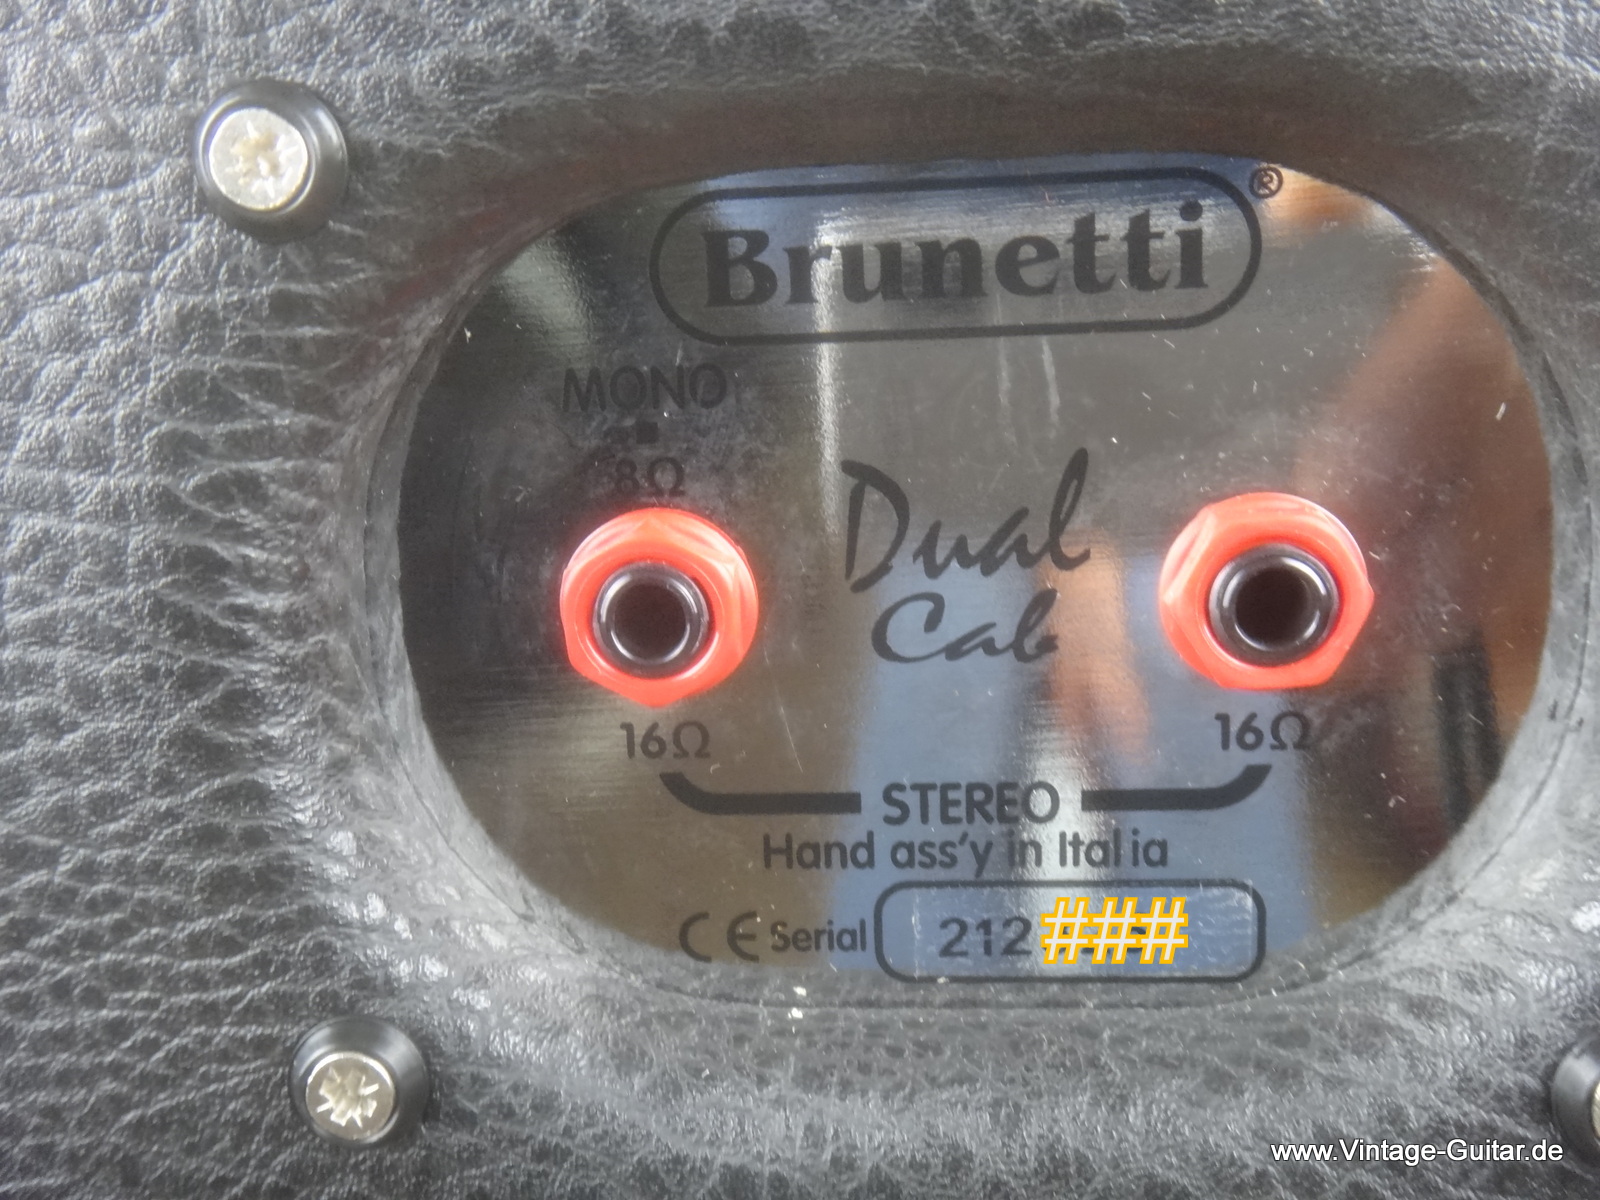 Brunetti-XL-120-Top-Dual-Cab-005.JPG